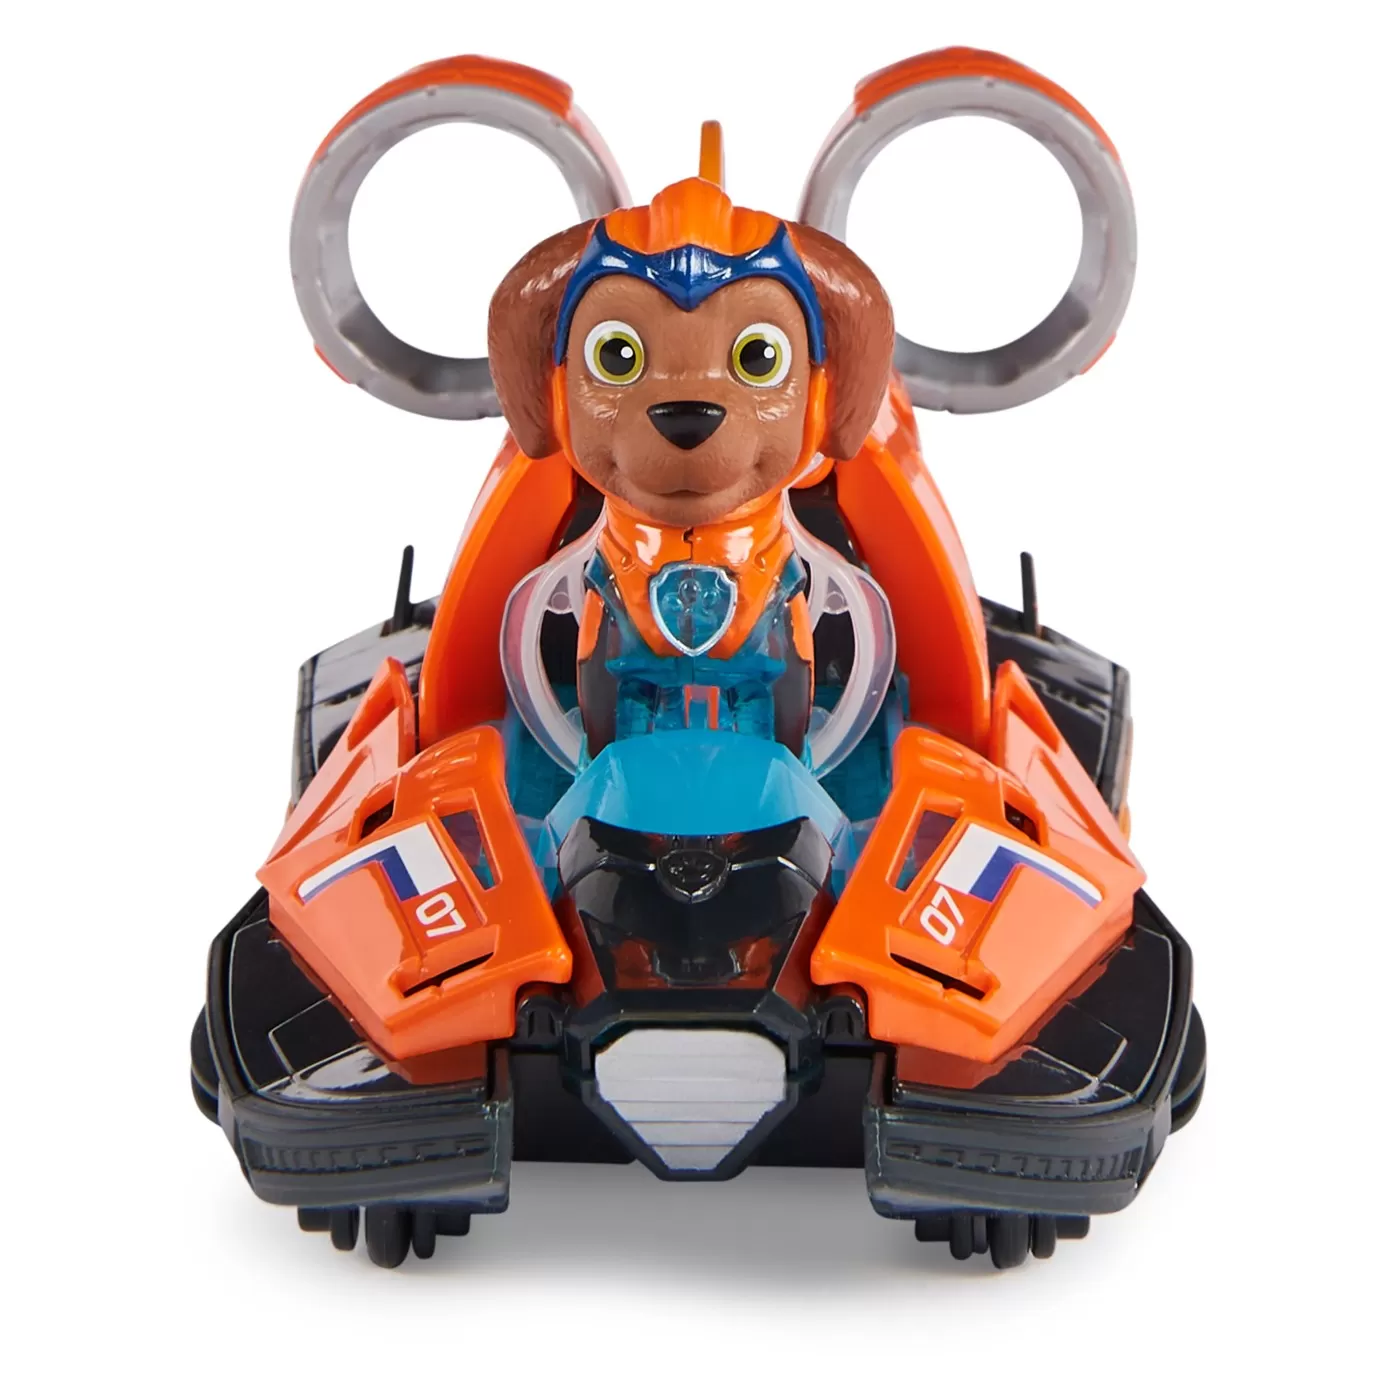 Vehicul si figurina Zuma Patrula Catelusilor, Nickelodeon